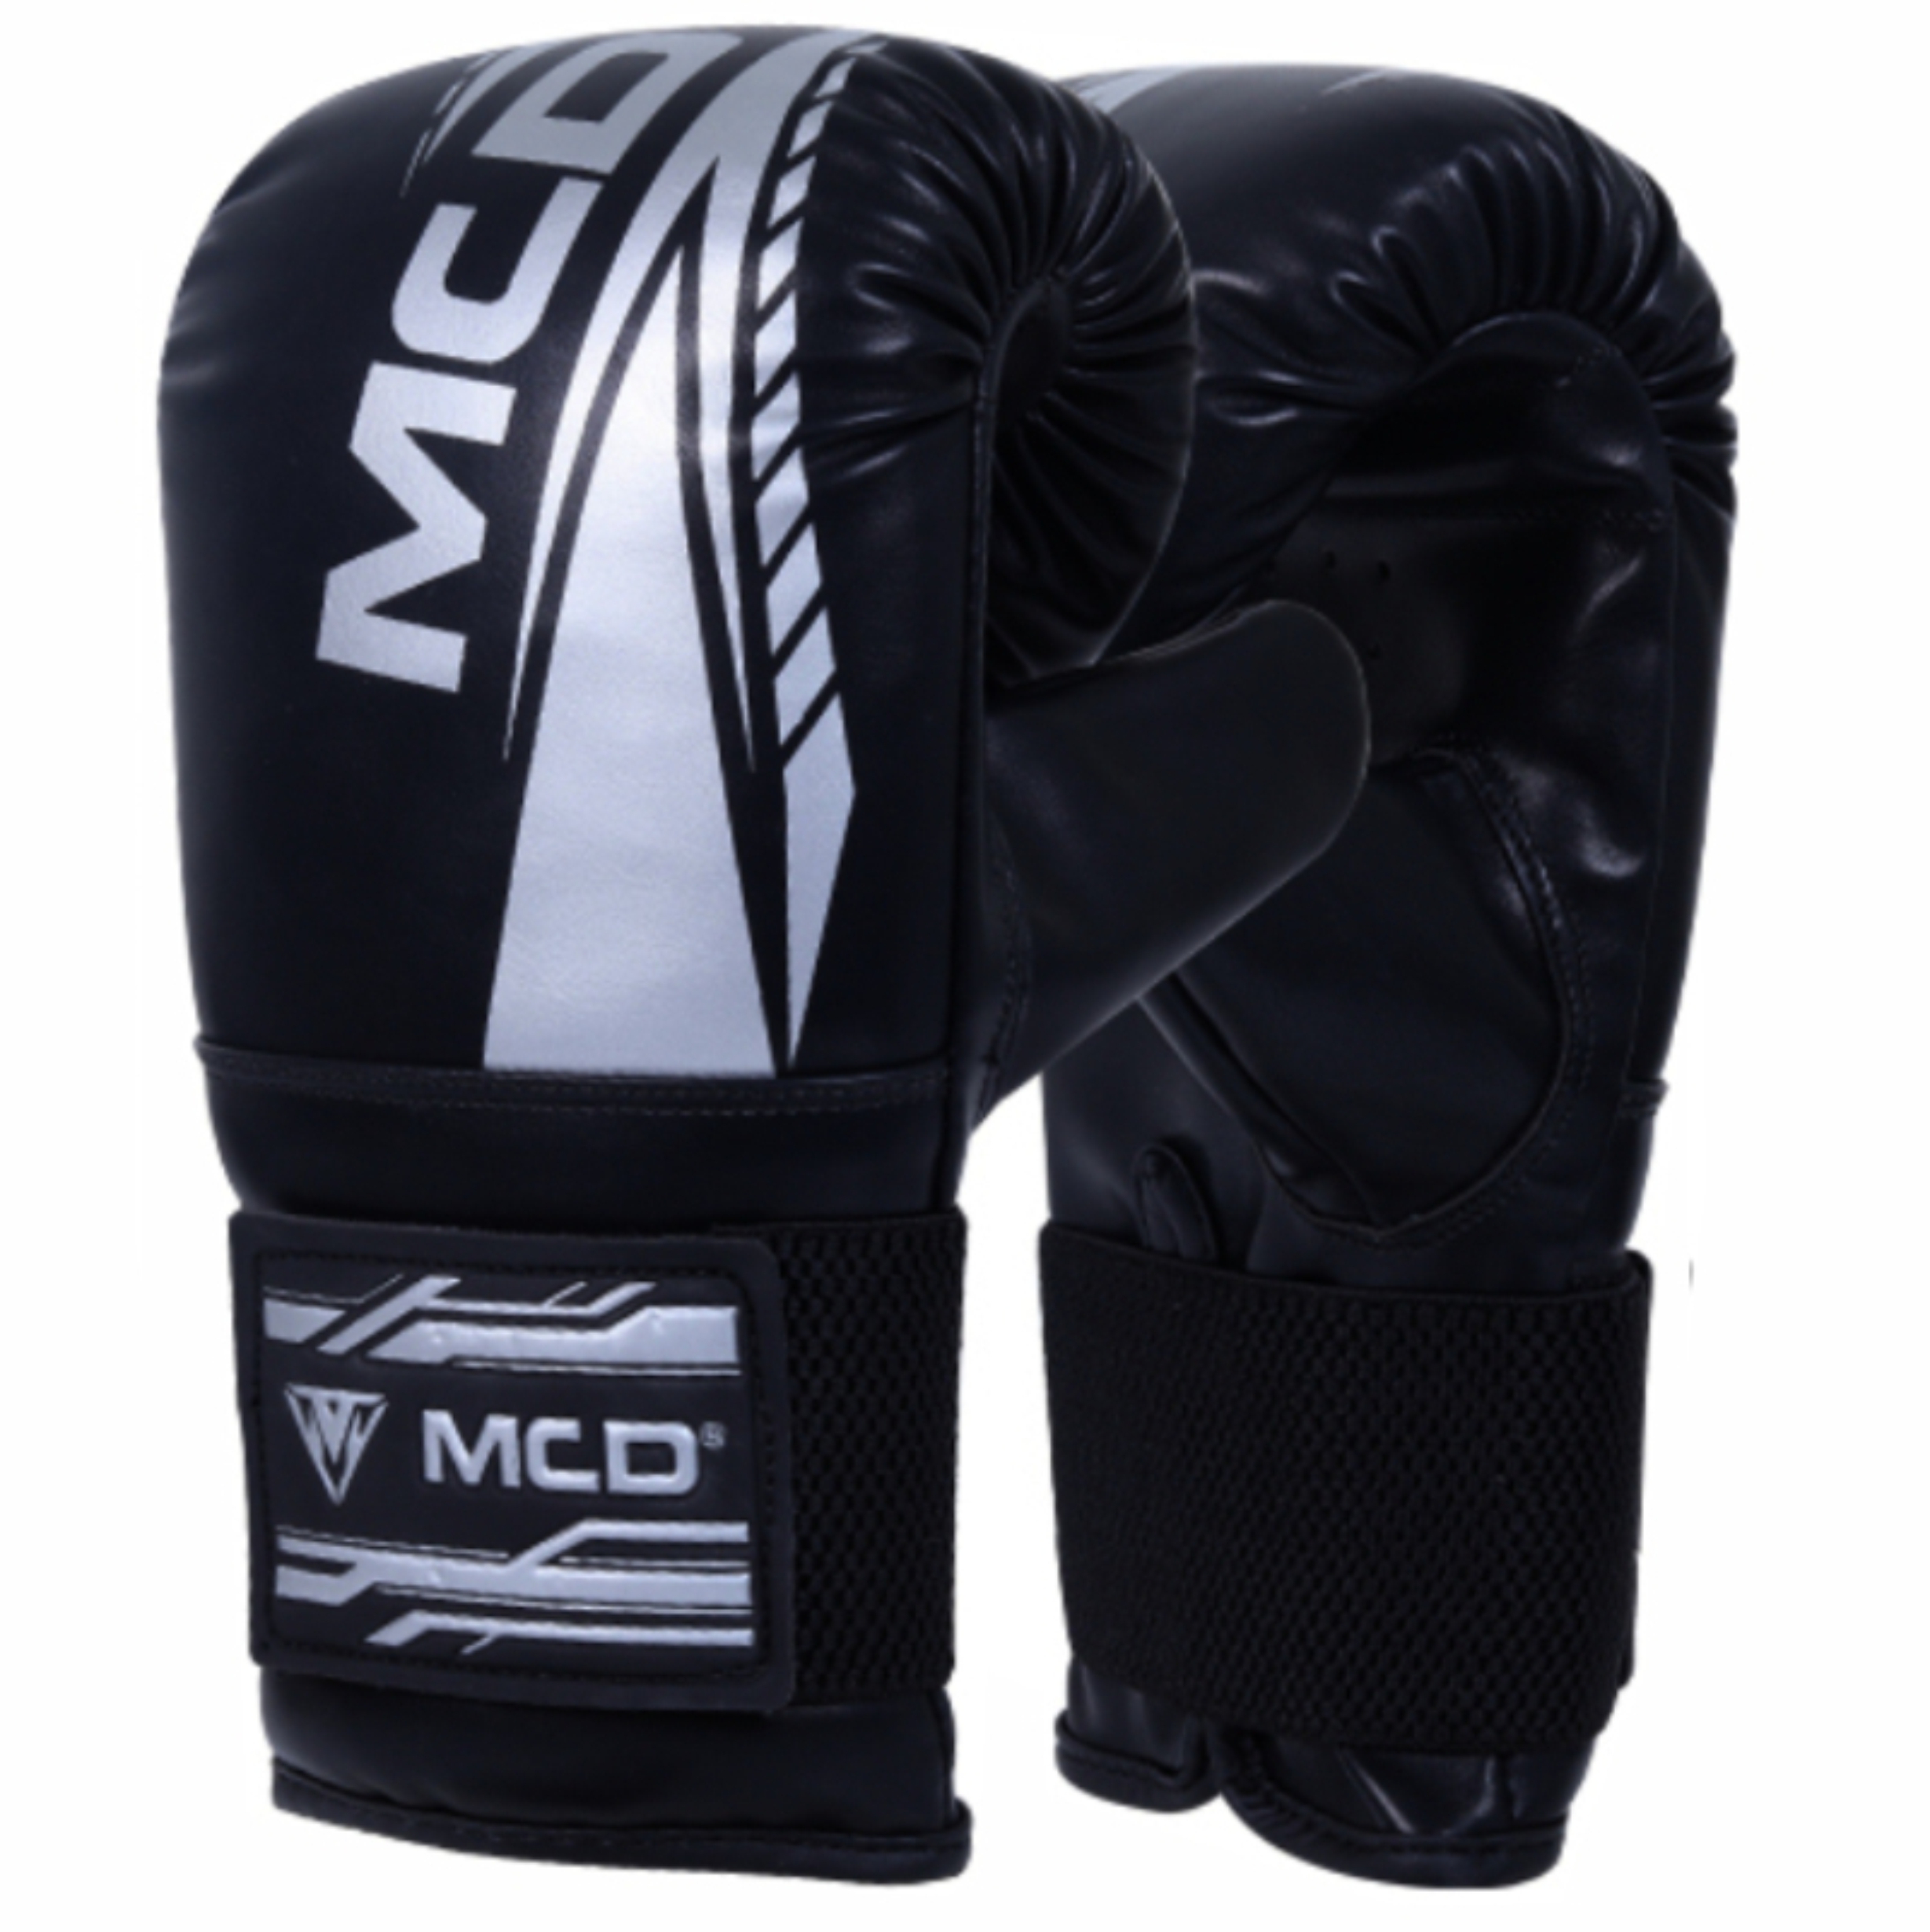 Mcd Punch Mitt, Bag Mitt, Boxing Mitt, Boxing Training Gloves